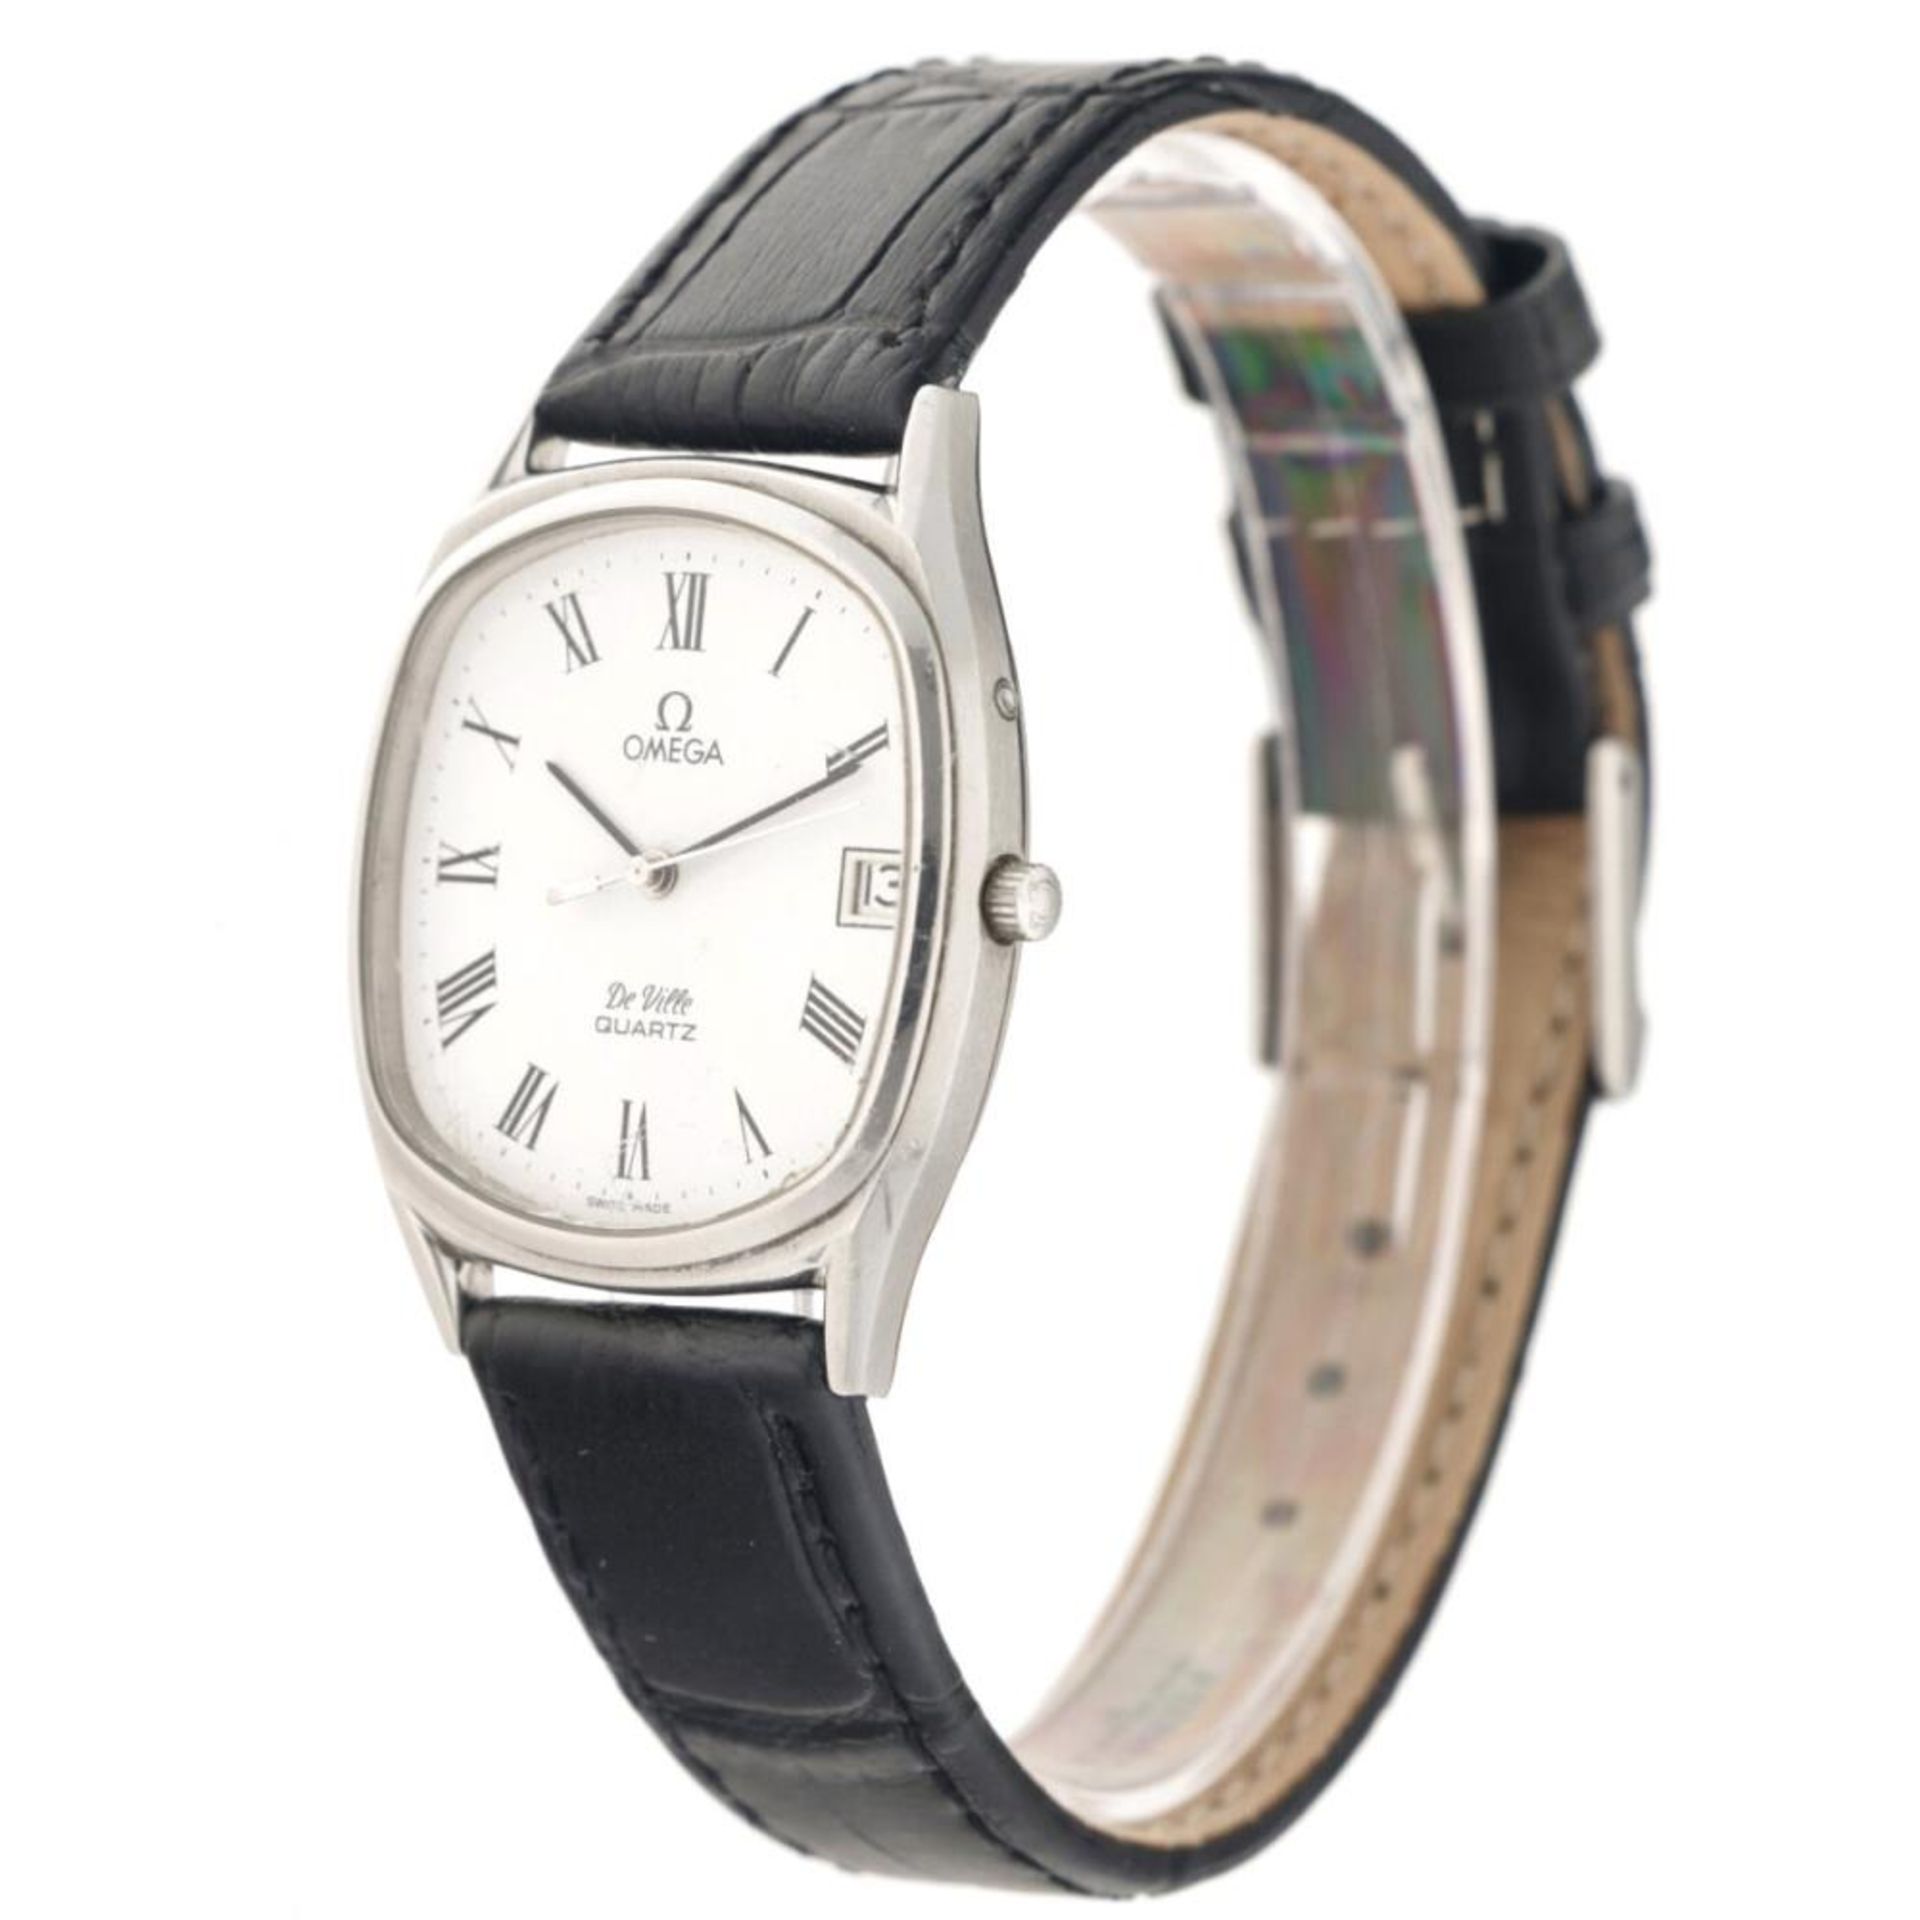 Omega de Ville 1920050 - Men's watch - approx. 1980. - Image 2 of 5